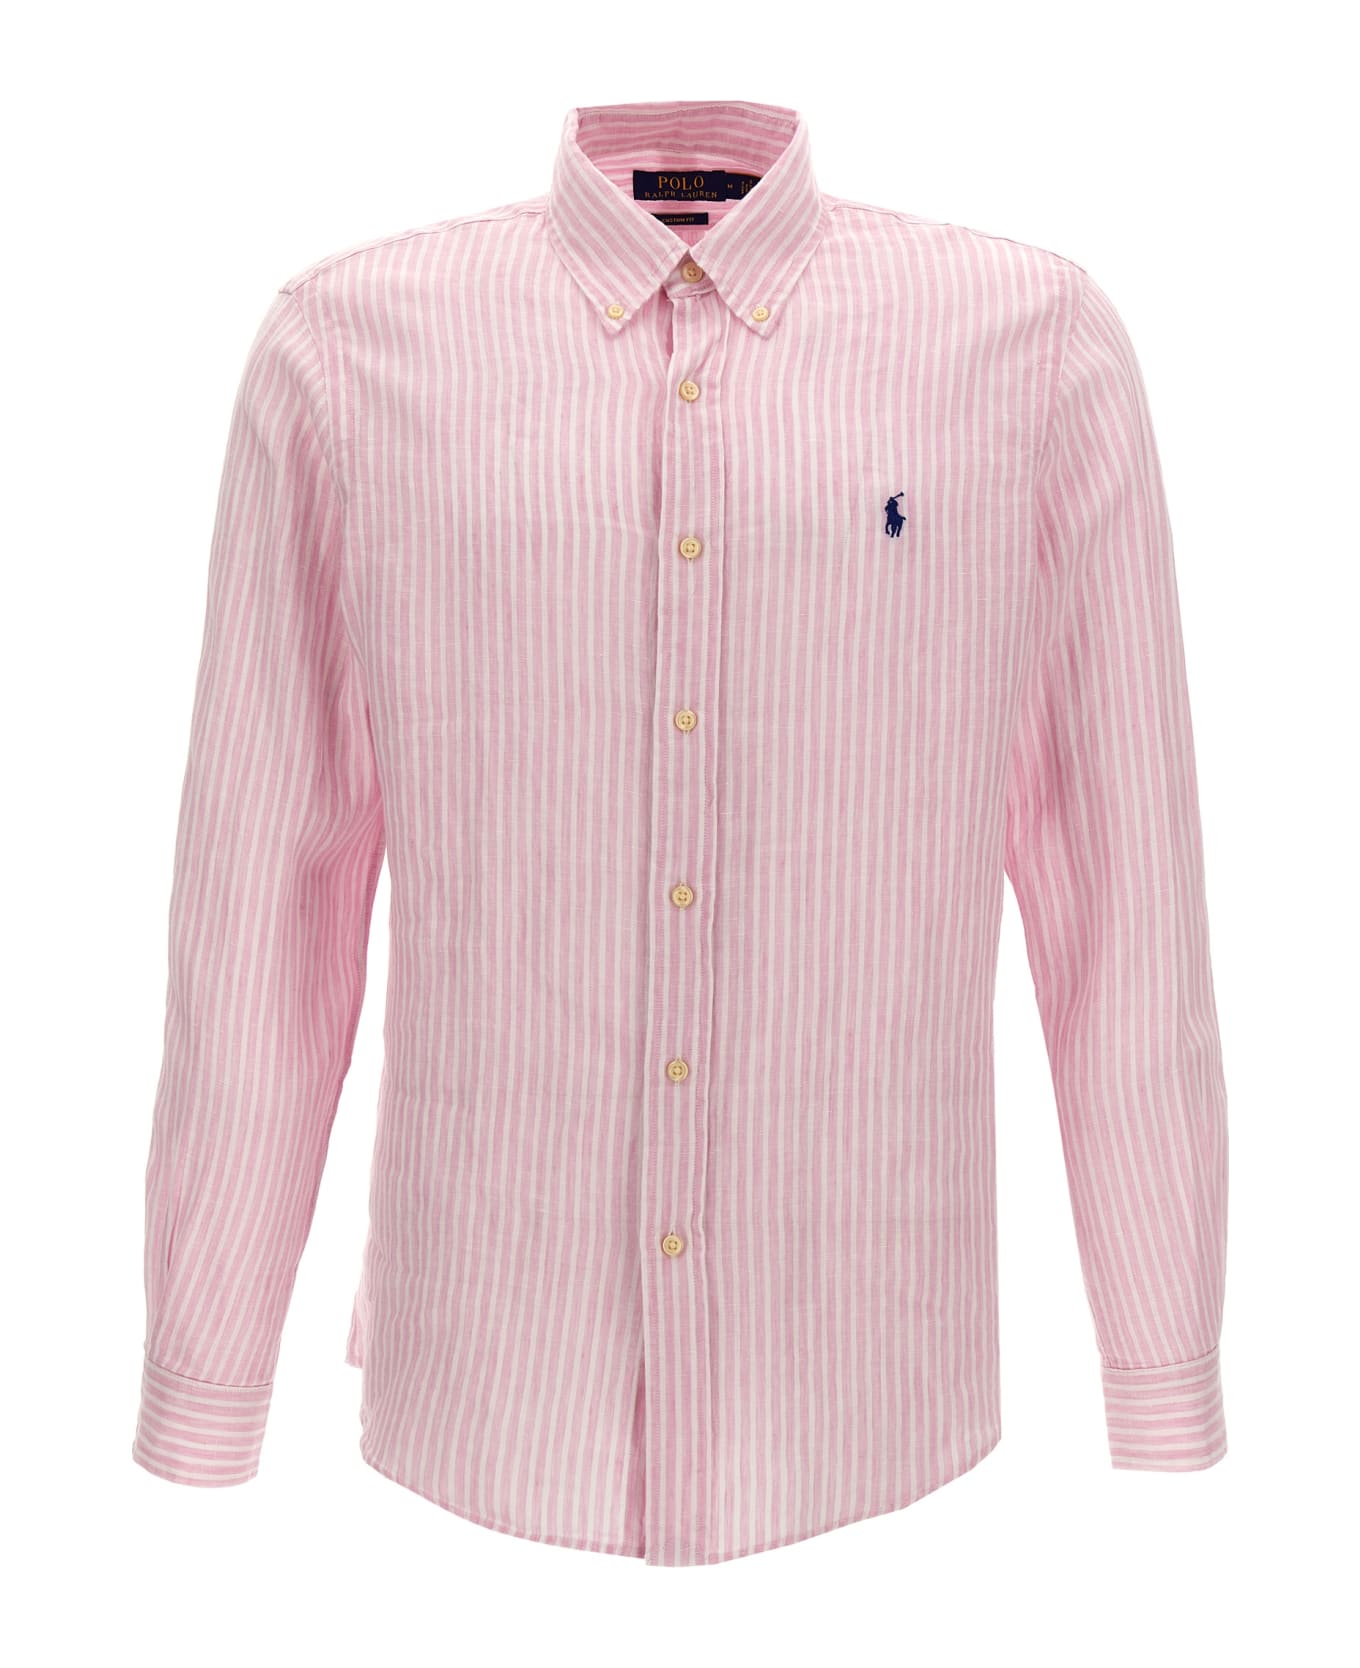 Polo Ralph Lauren Striped Linen Shirt - PINKWHITE